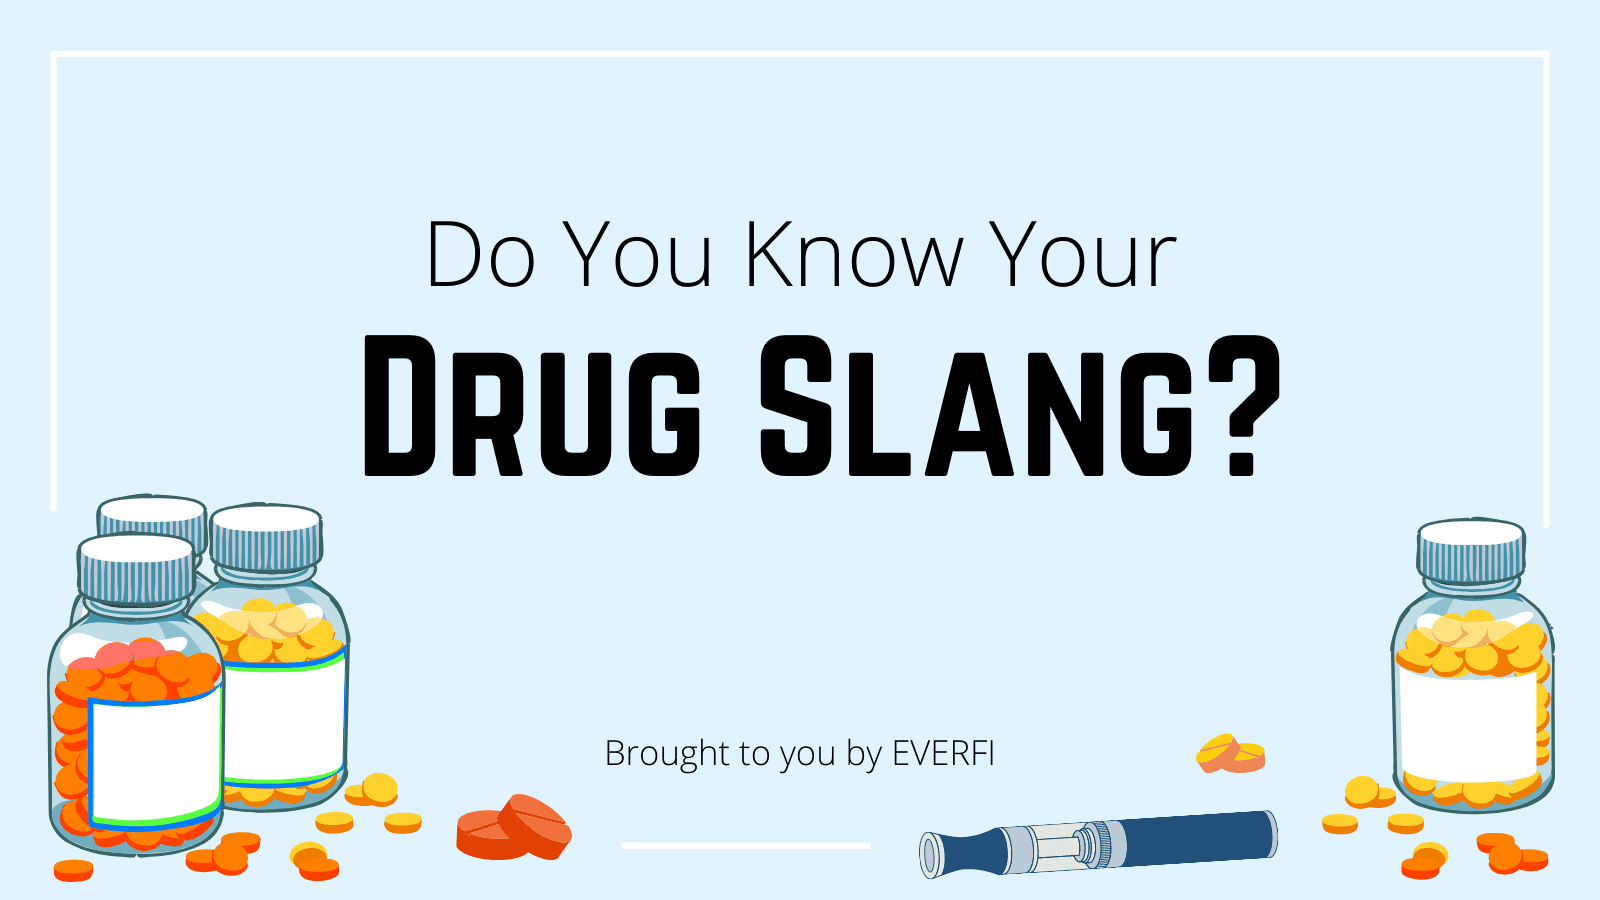 Do you know your drug slang?